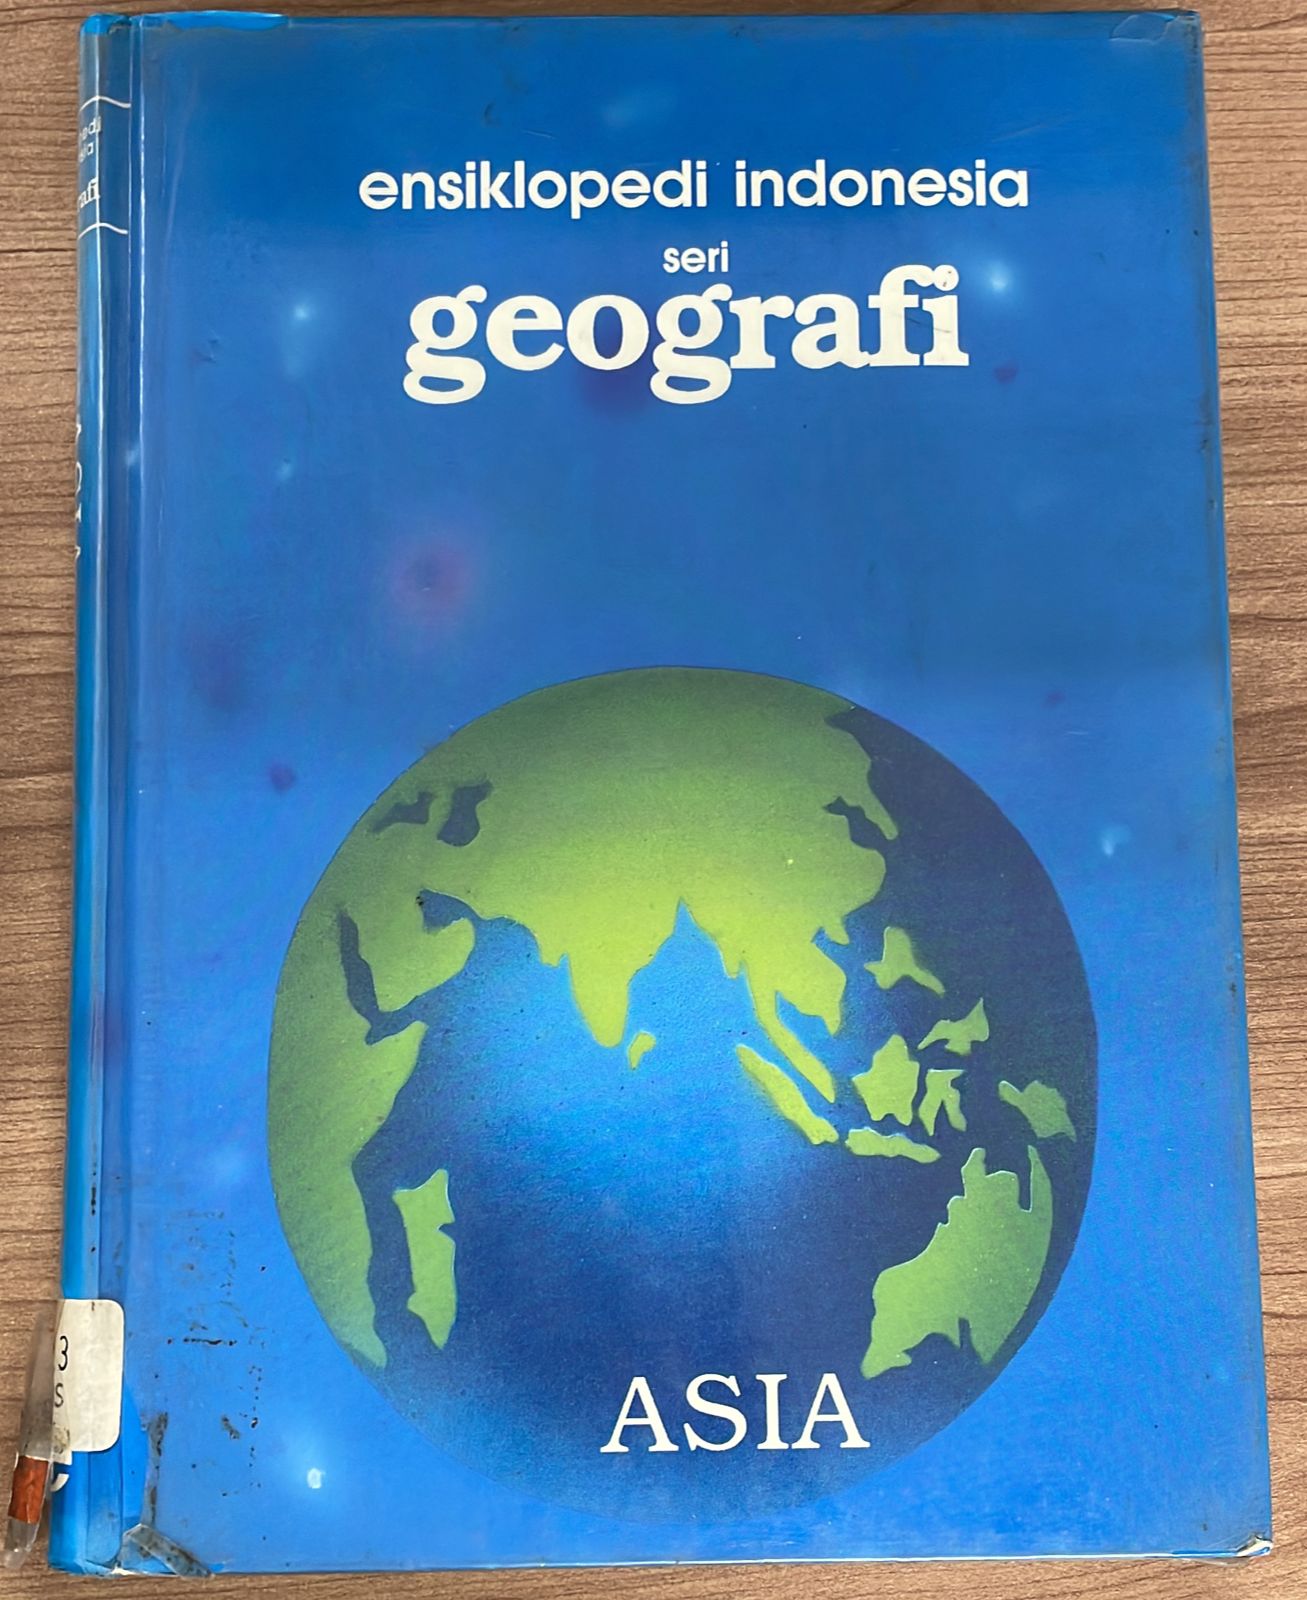 Ensiklopedi seri Indonesia geografi :  Asia